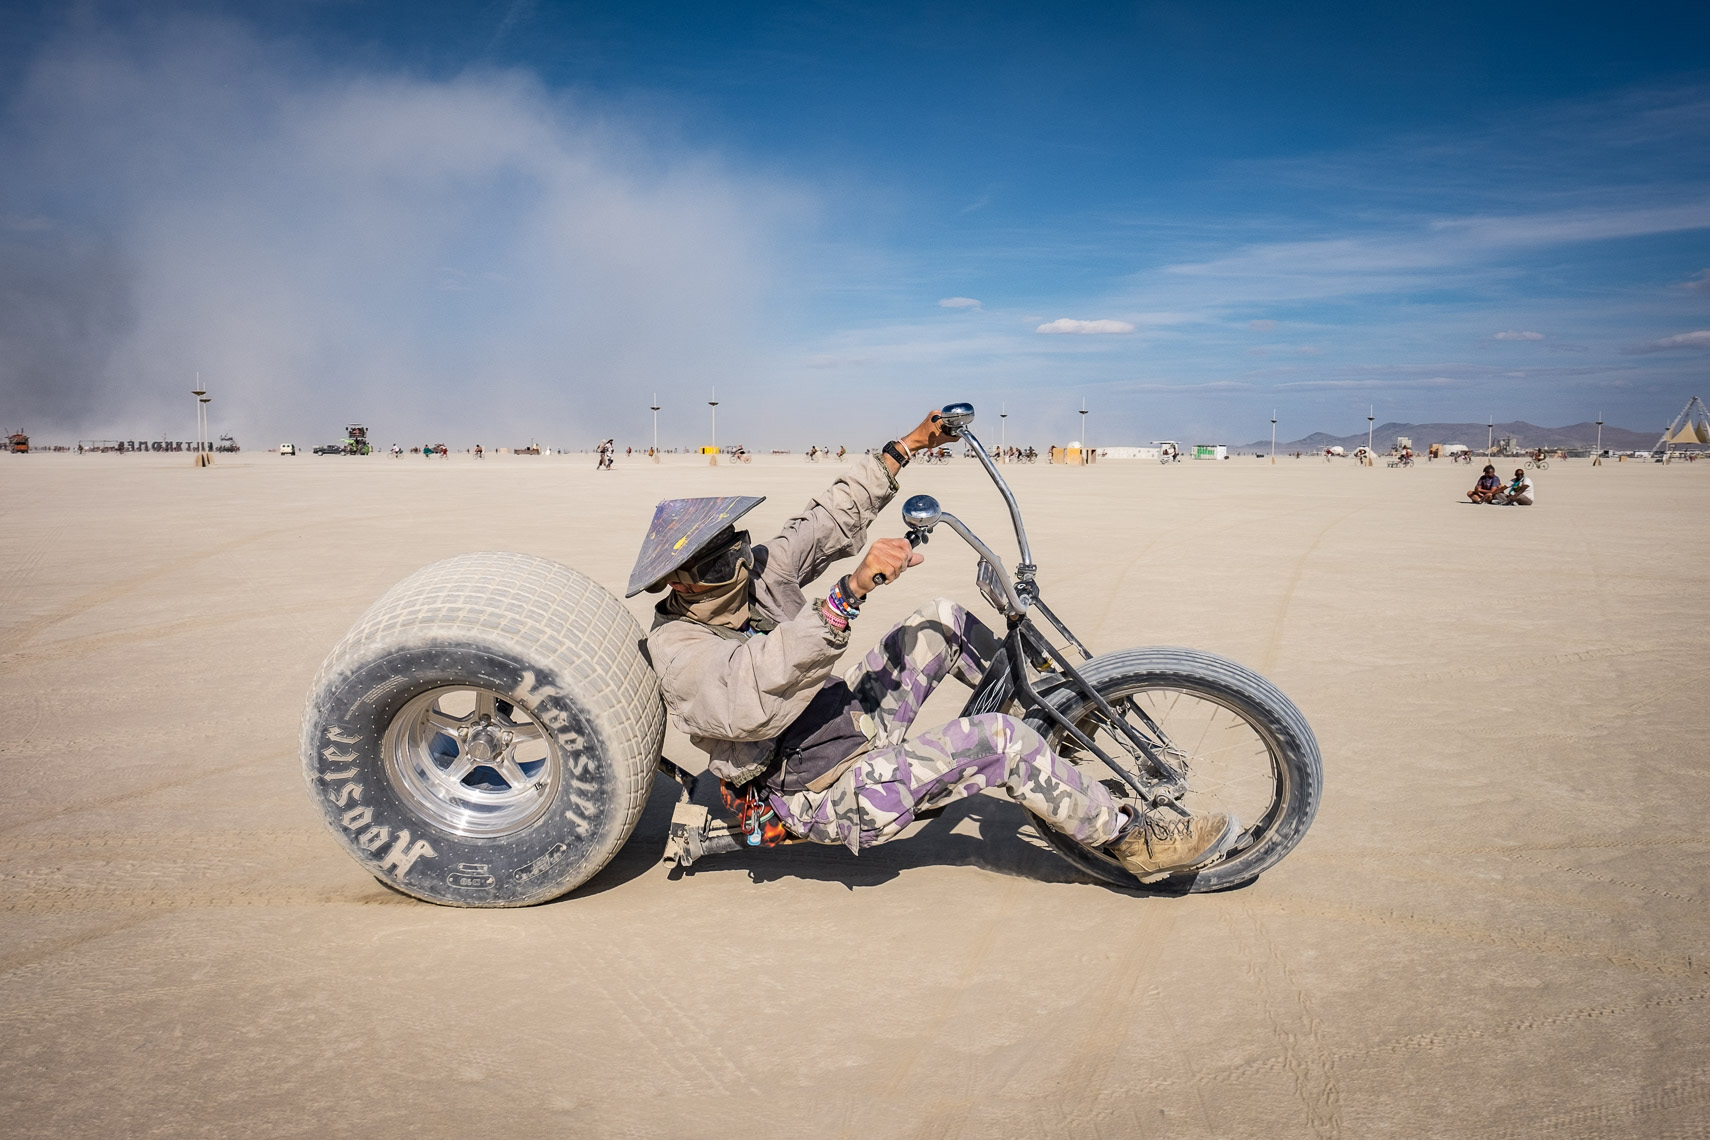 Medusa Madness by Kevin Clark, Burning Man 2015  DAVID JULIAN:  photographer, illustrator, educator based in Seattle